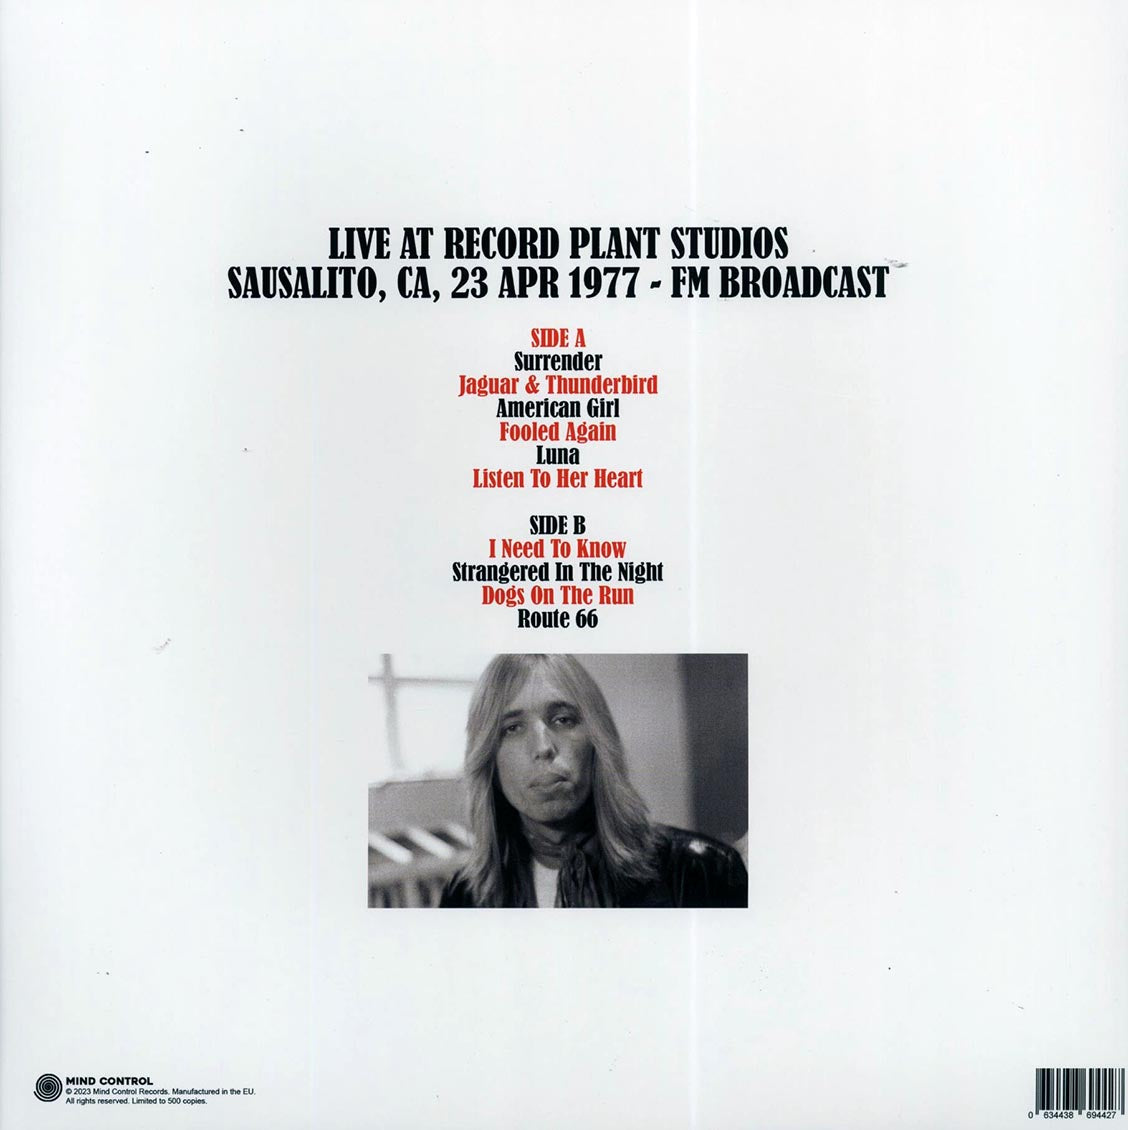 Tom Petty & The Heartbreakers - Surrender In California: The Sausalito Record Plant Broadcast - Vinyl LP, LP